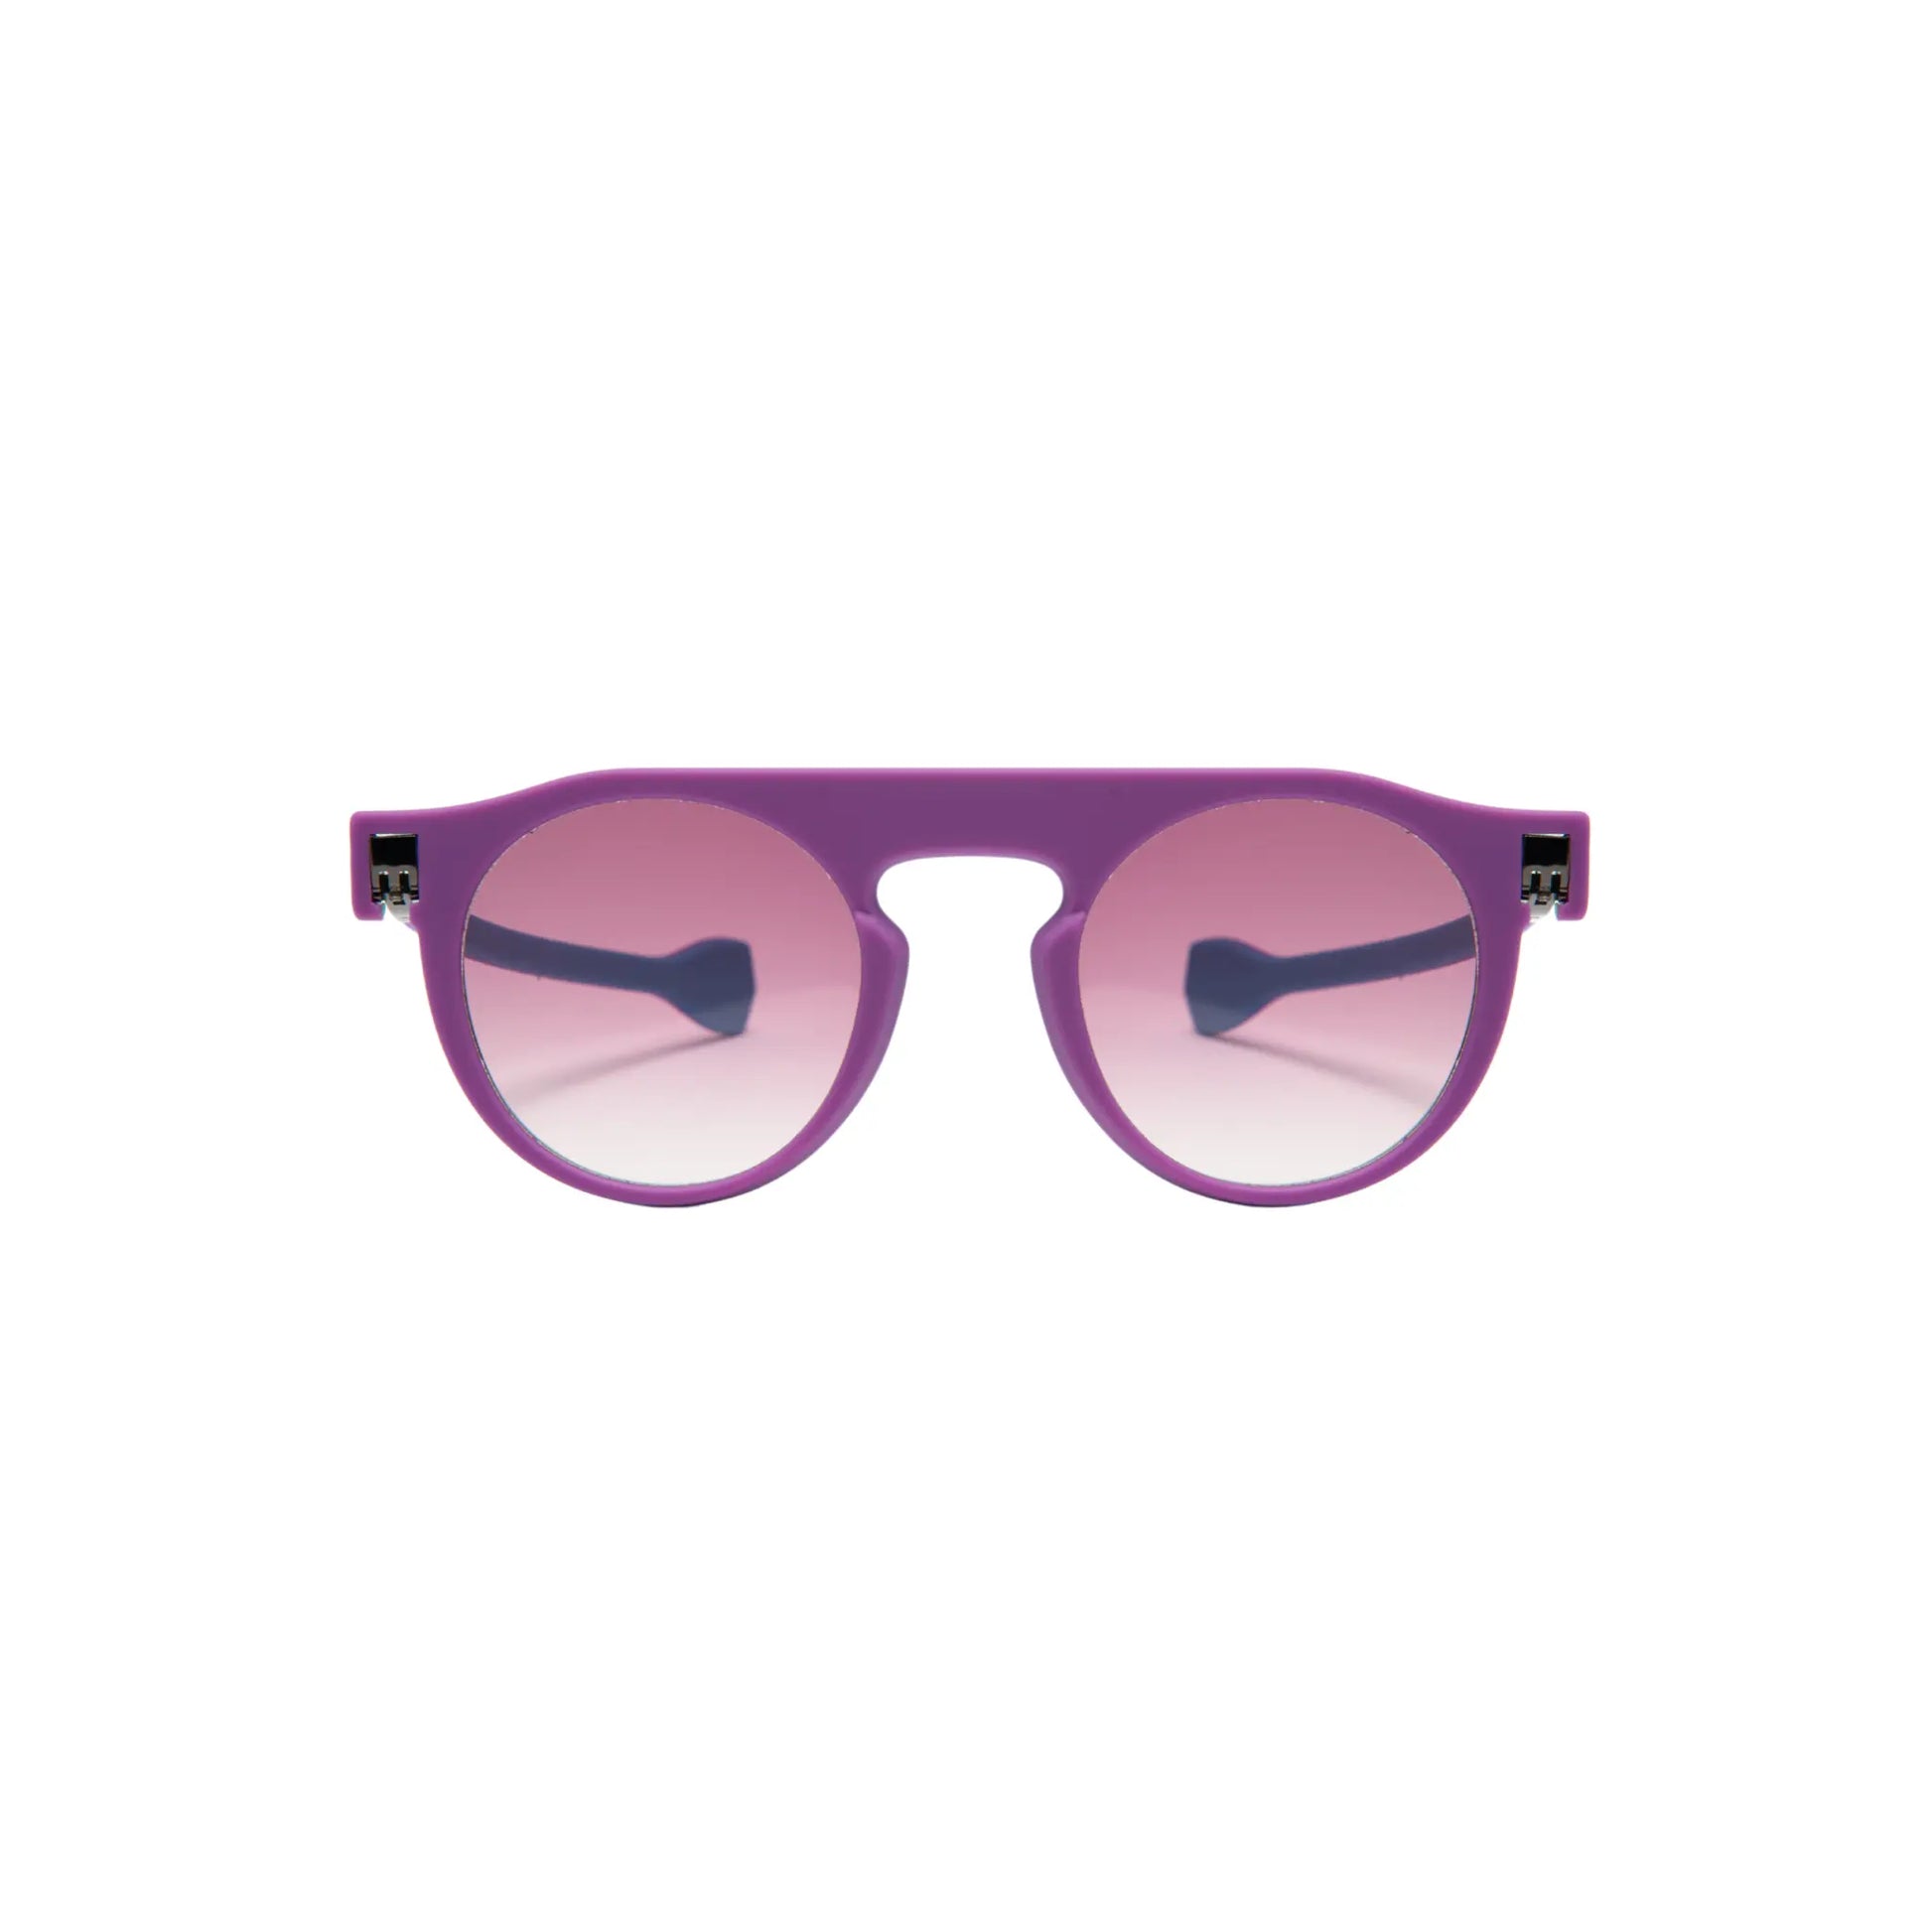 Reverso sunglasses violet & tiffany blue reversible & ultra light front view 2